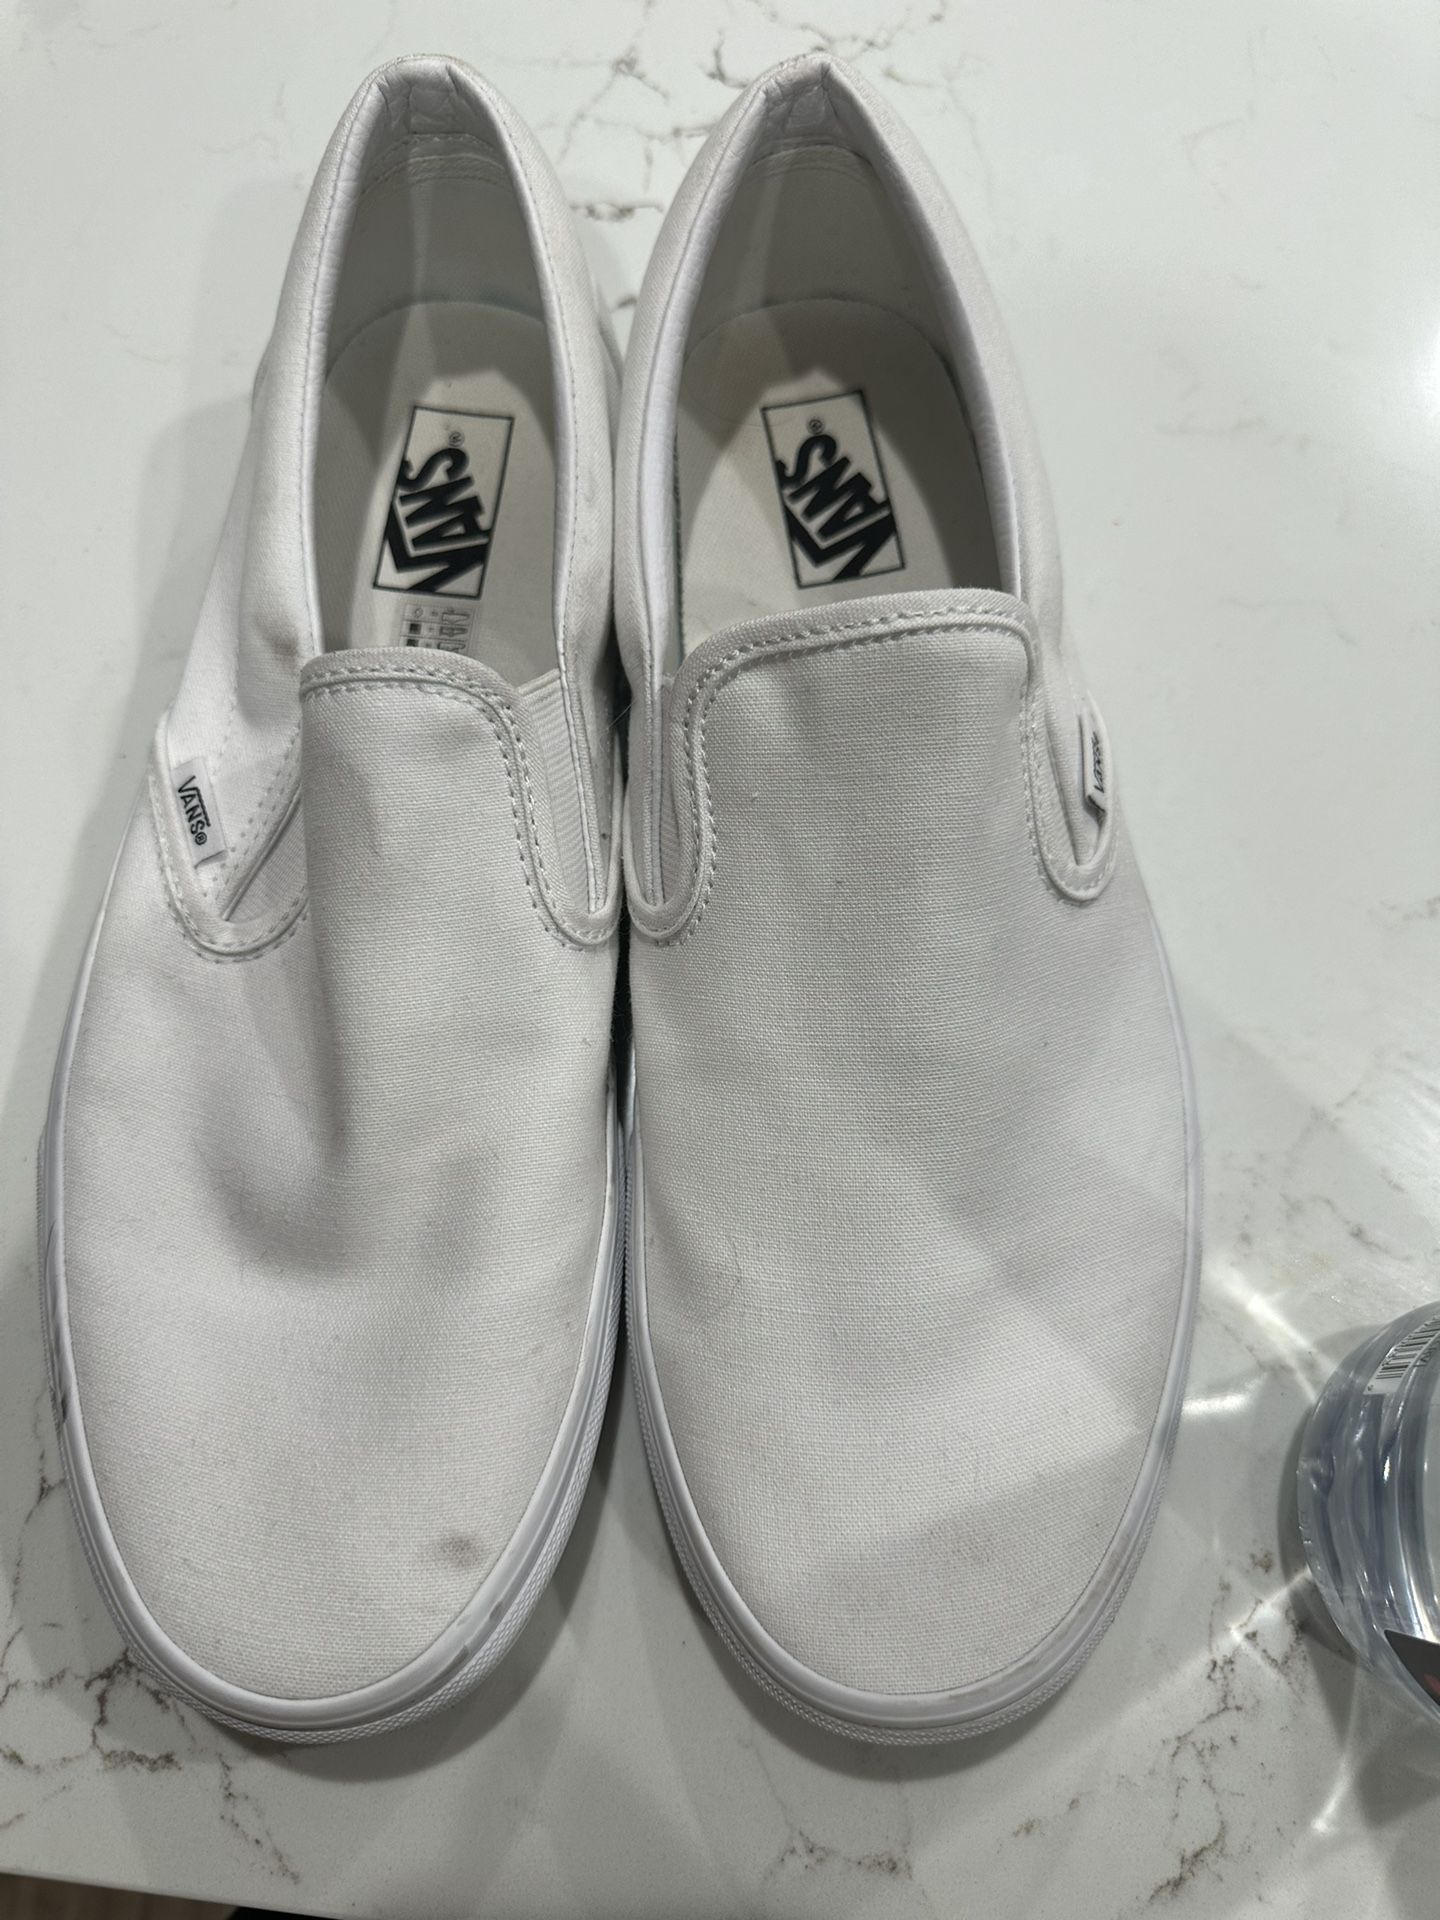 Mens• Size 12 •Vans Classic Slip-On White Shoes